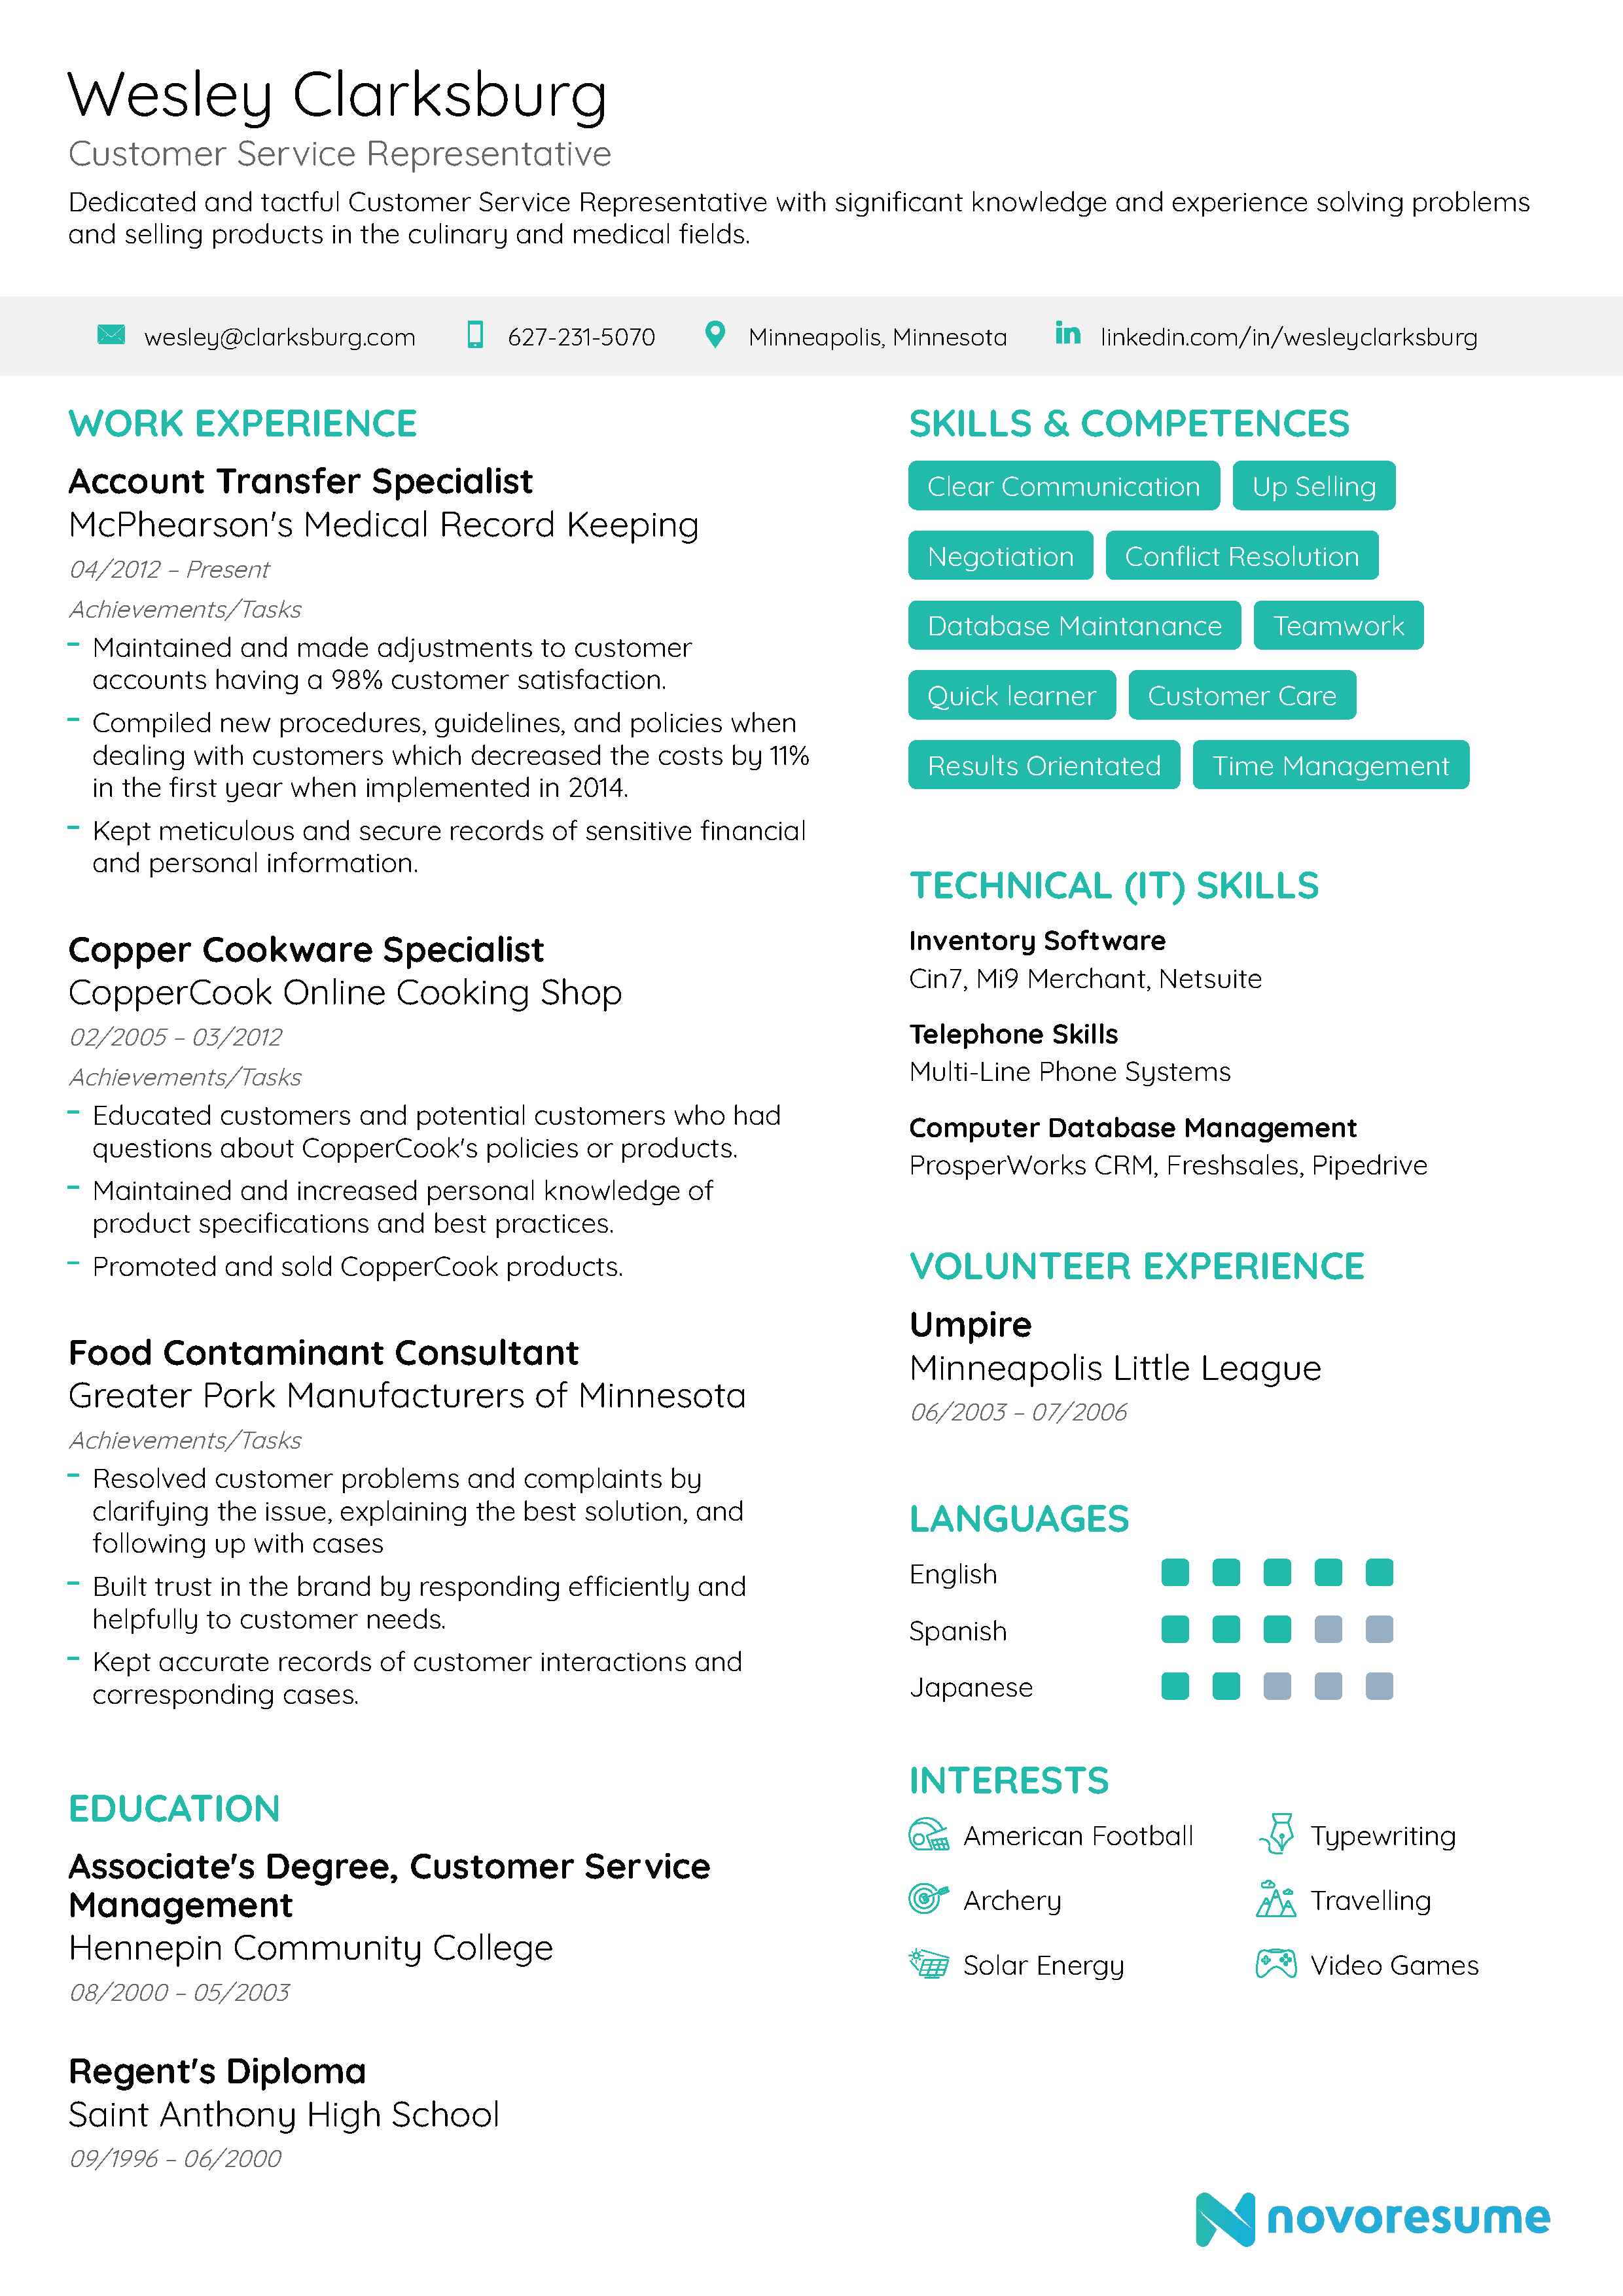 Resume For Customer Service Customer Service Resume resume for customer service|wikiresume.com